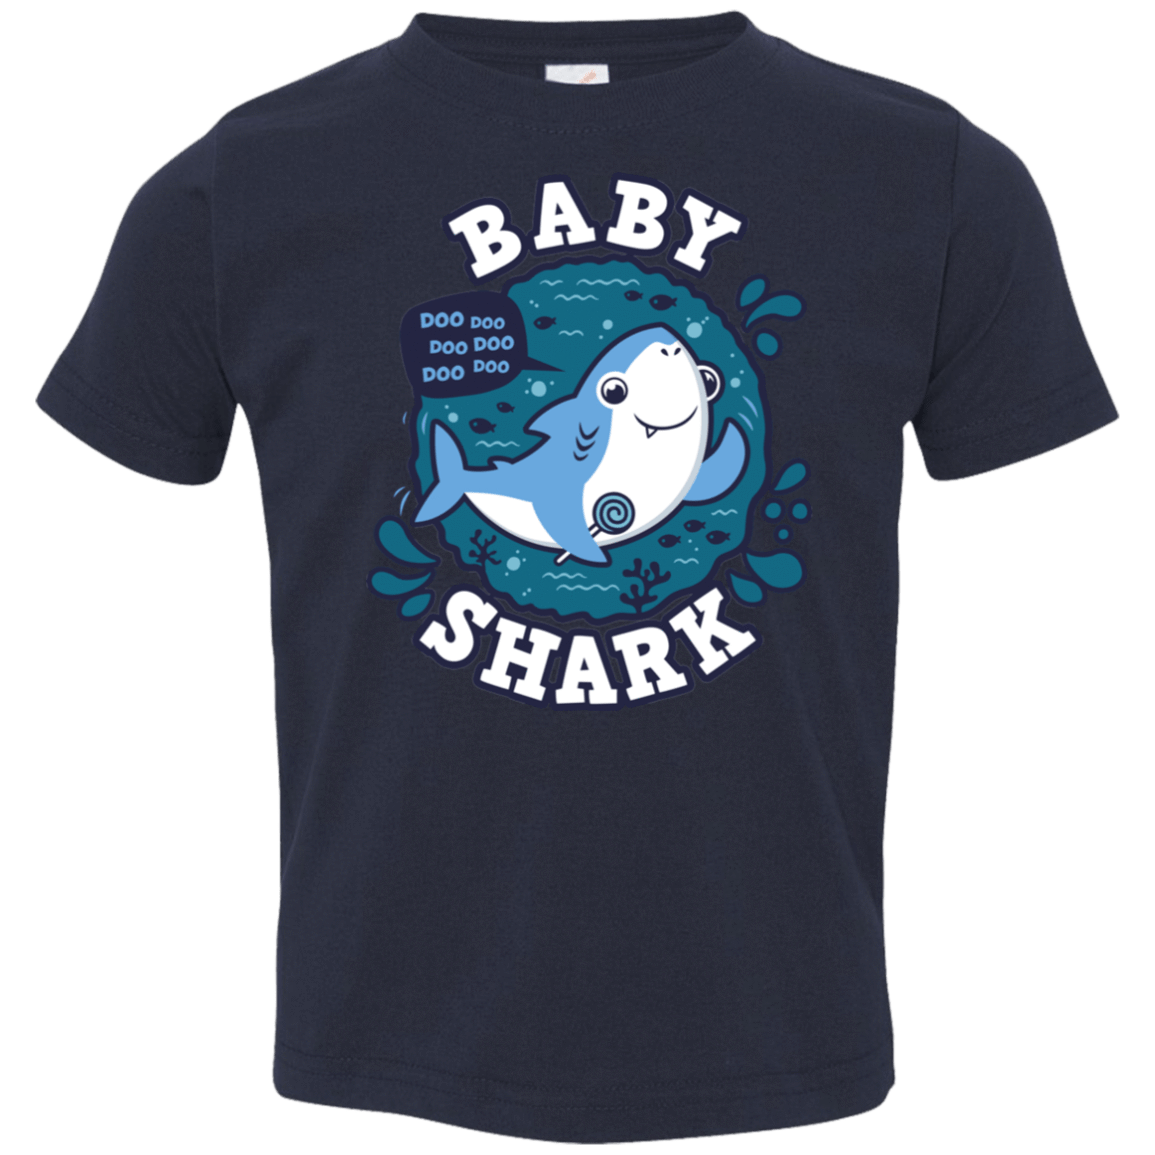 T-Shirts Navy / 2T Shark Family trazo - Baby Boy Toddler Premium T-Shirt